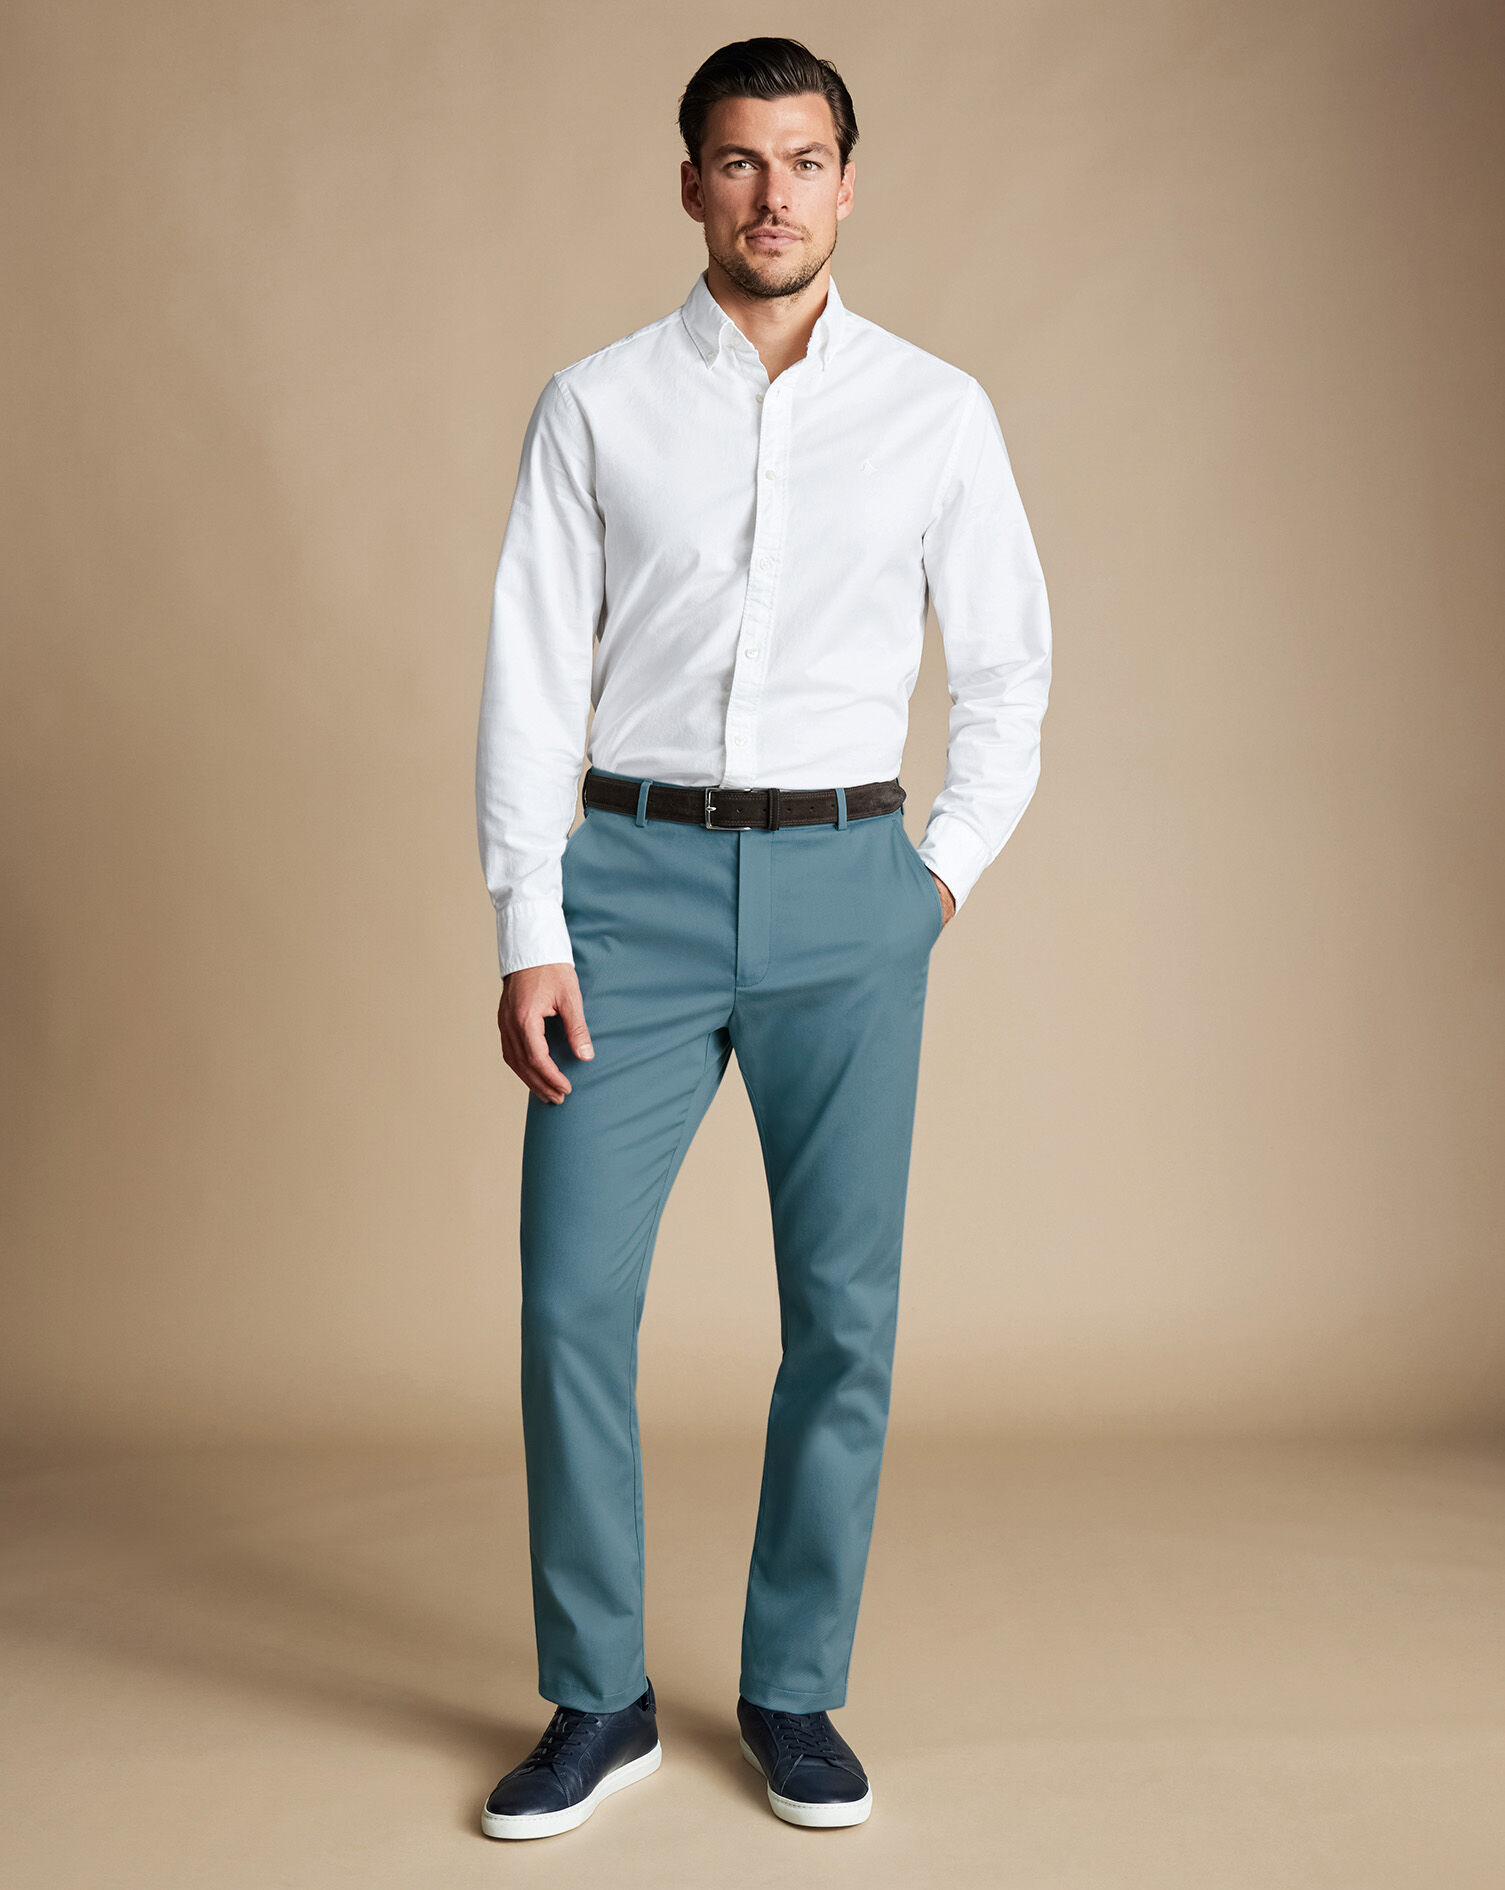 Men's Guide to Matching Pant Shirt Color Combination - LooksGud.com | Blue shirt  combination, Blue shirt men, Shirt outfit men